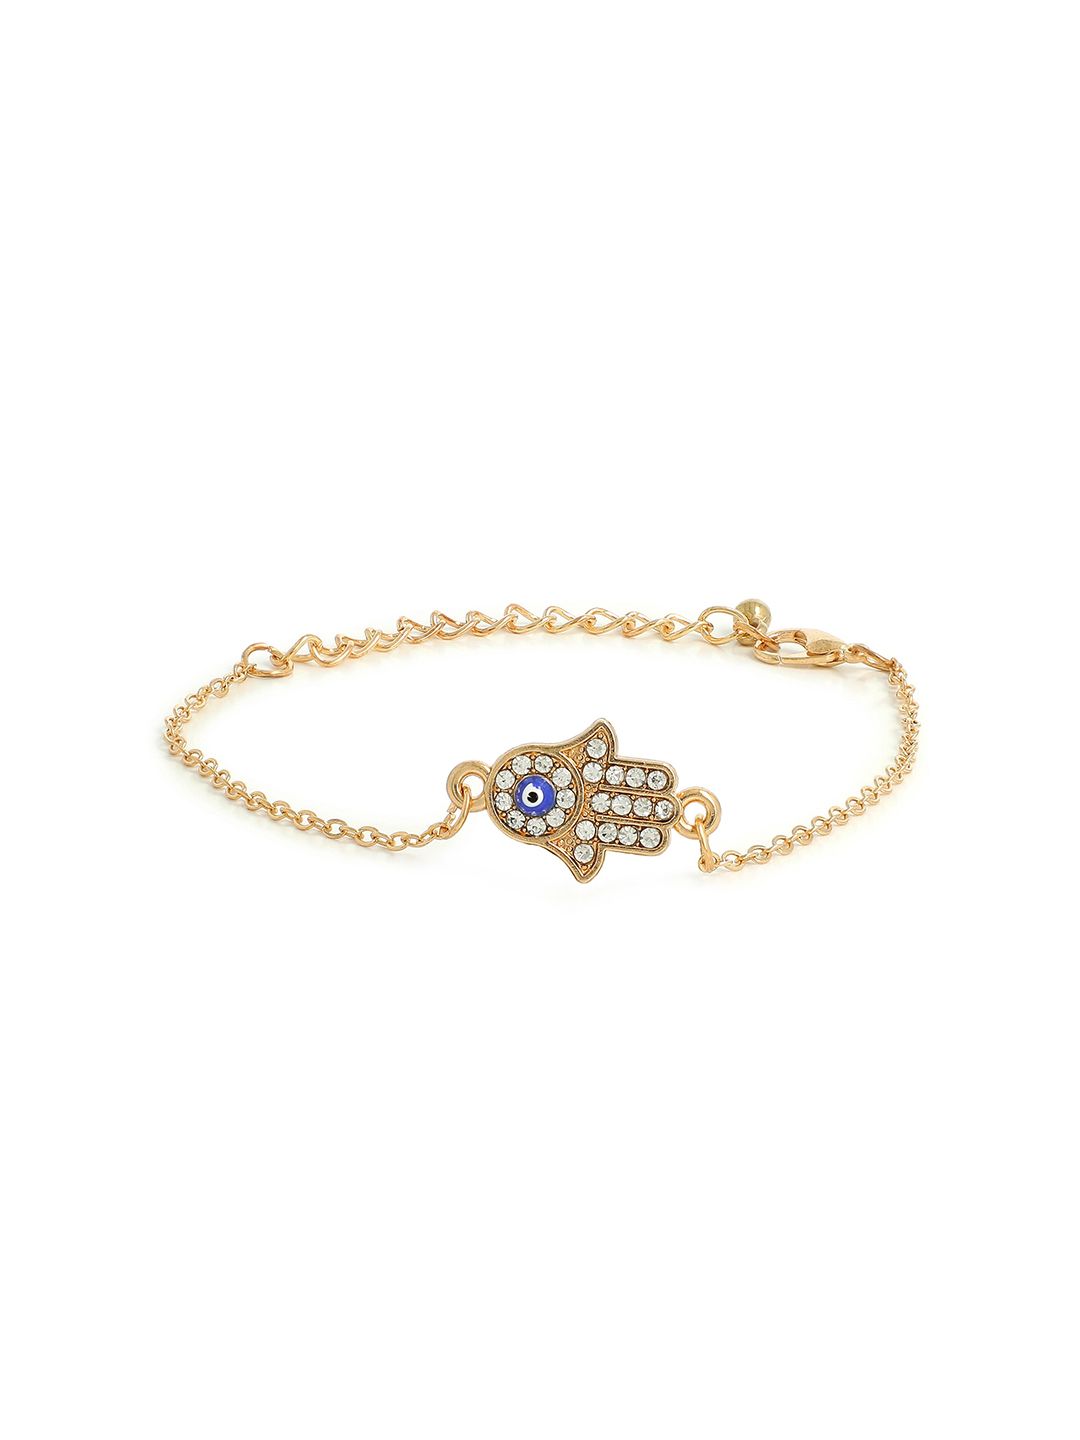 EL REGALO Gold-Toned & White Embellished Armlet Bracelet Price in India